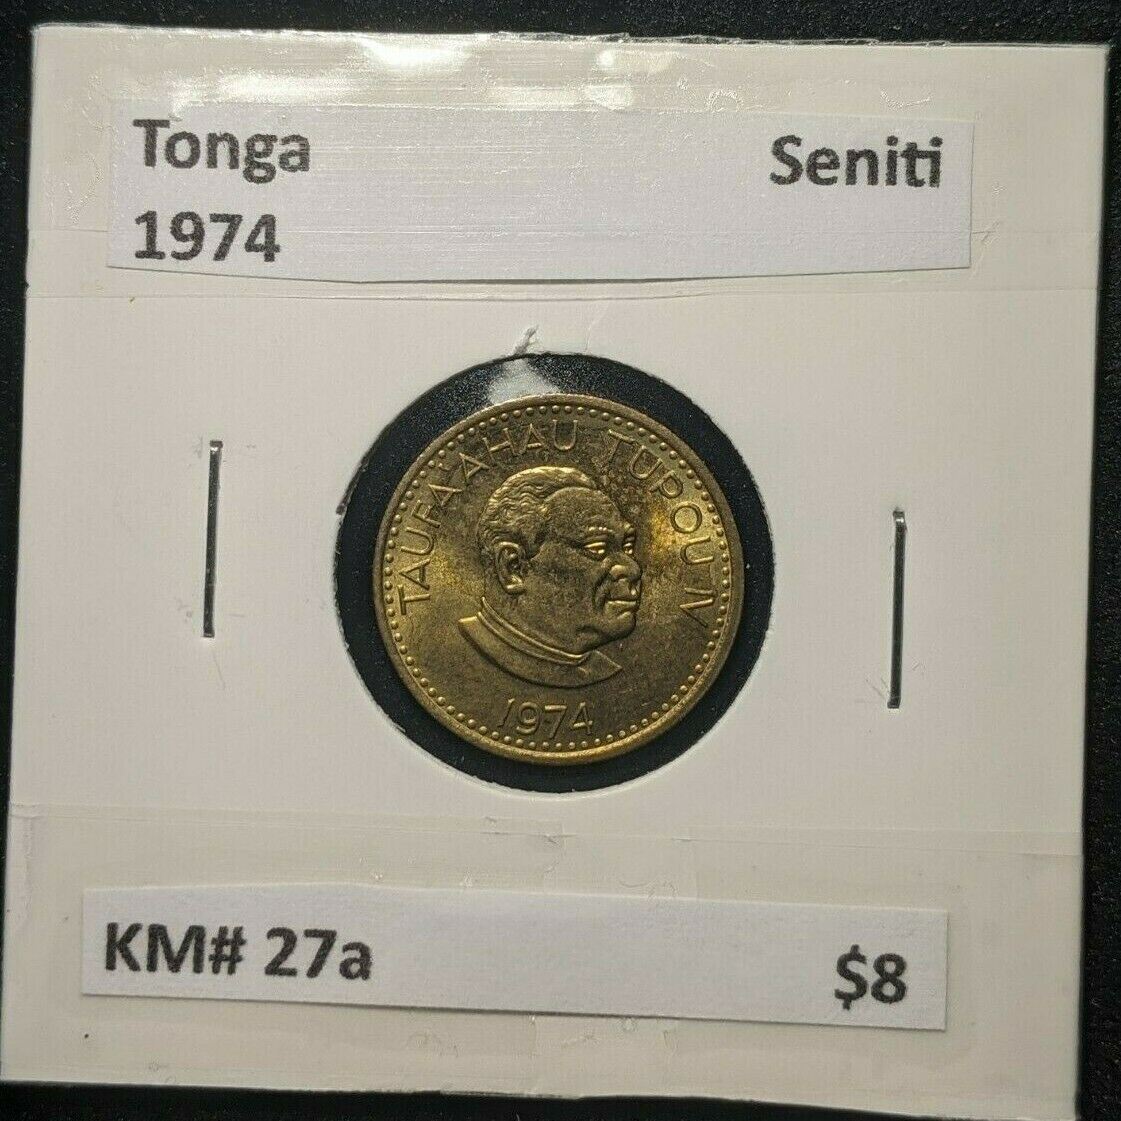 Tonga 1974 Seniti KM# 27a   #0191   10B